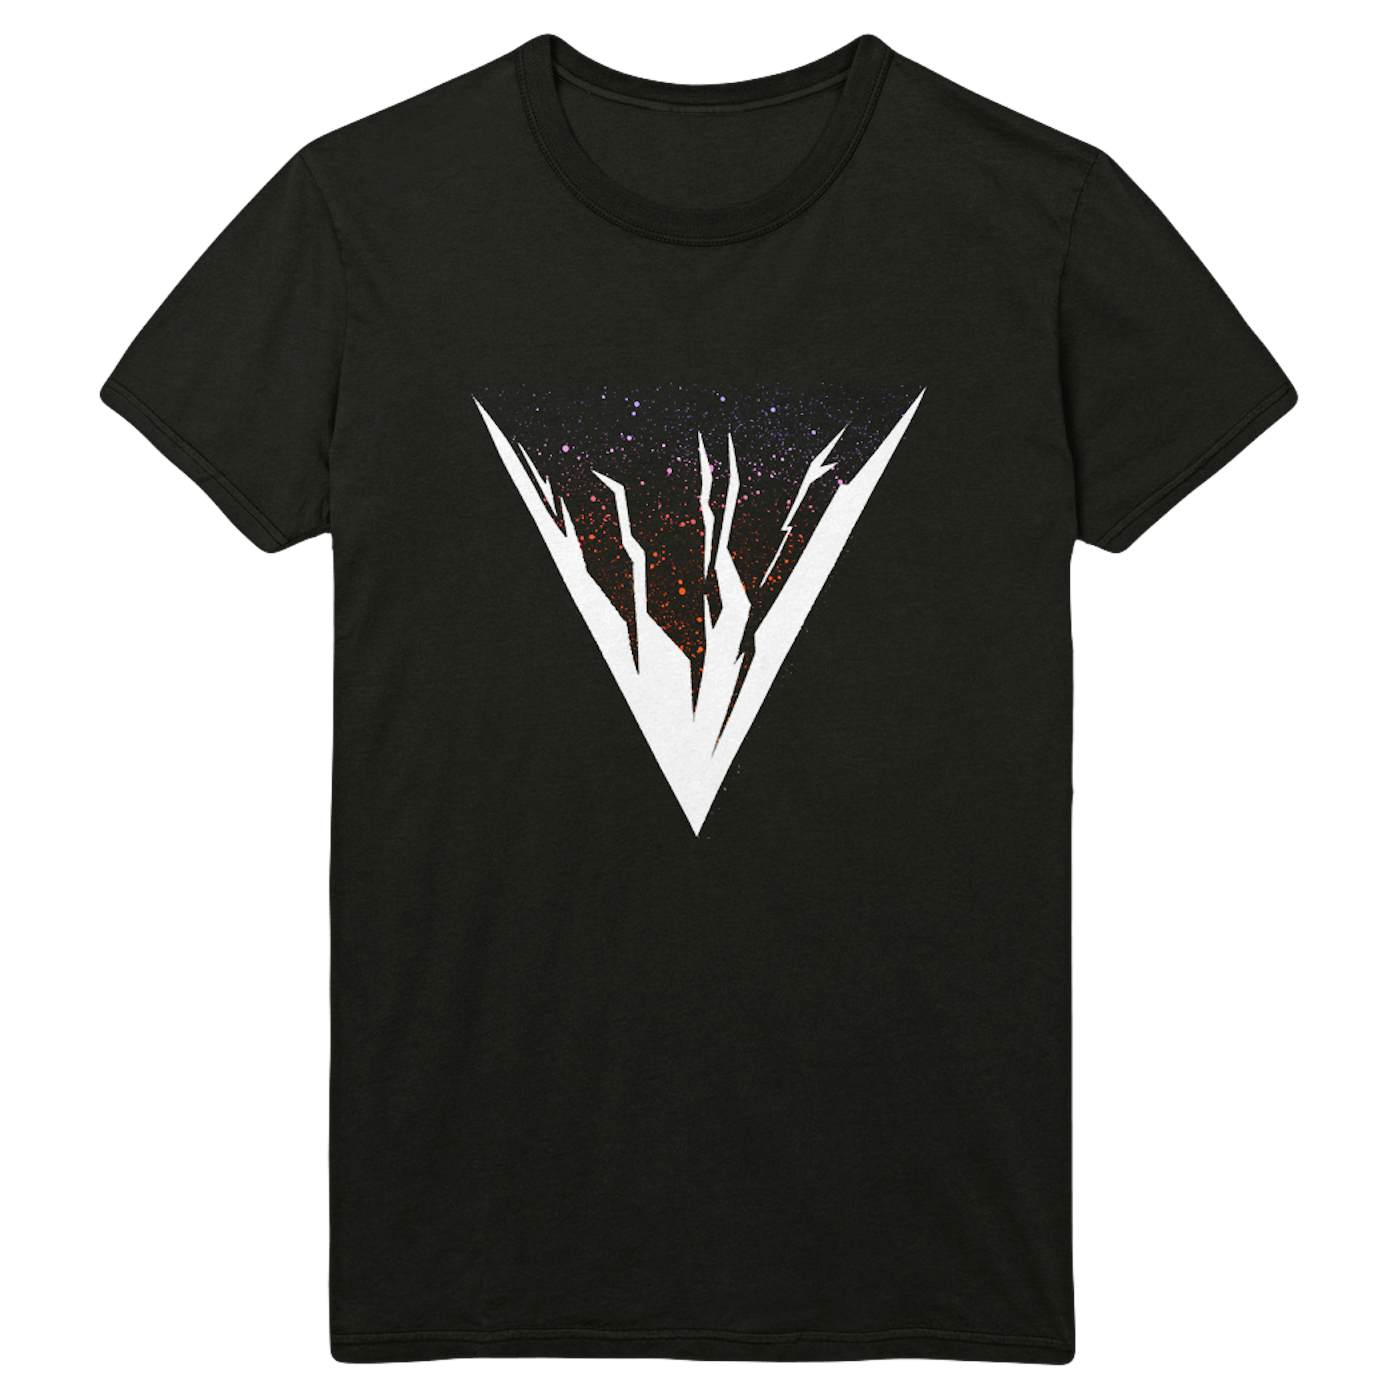 DJ Shadow The Mountain Will Fall Tour T-Shirt